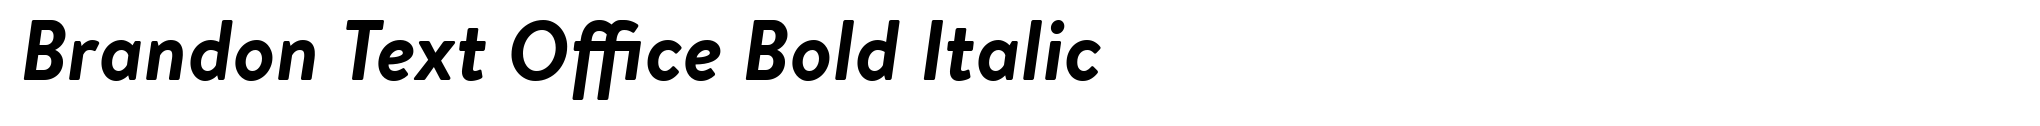 Brandon Text Office Bold Italic image